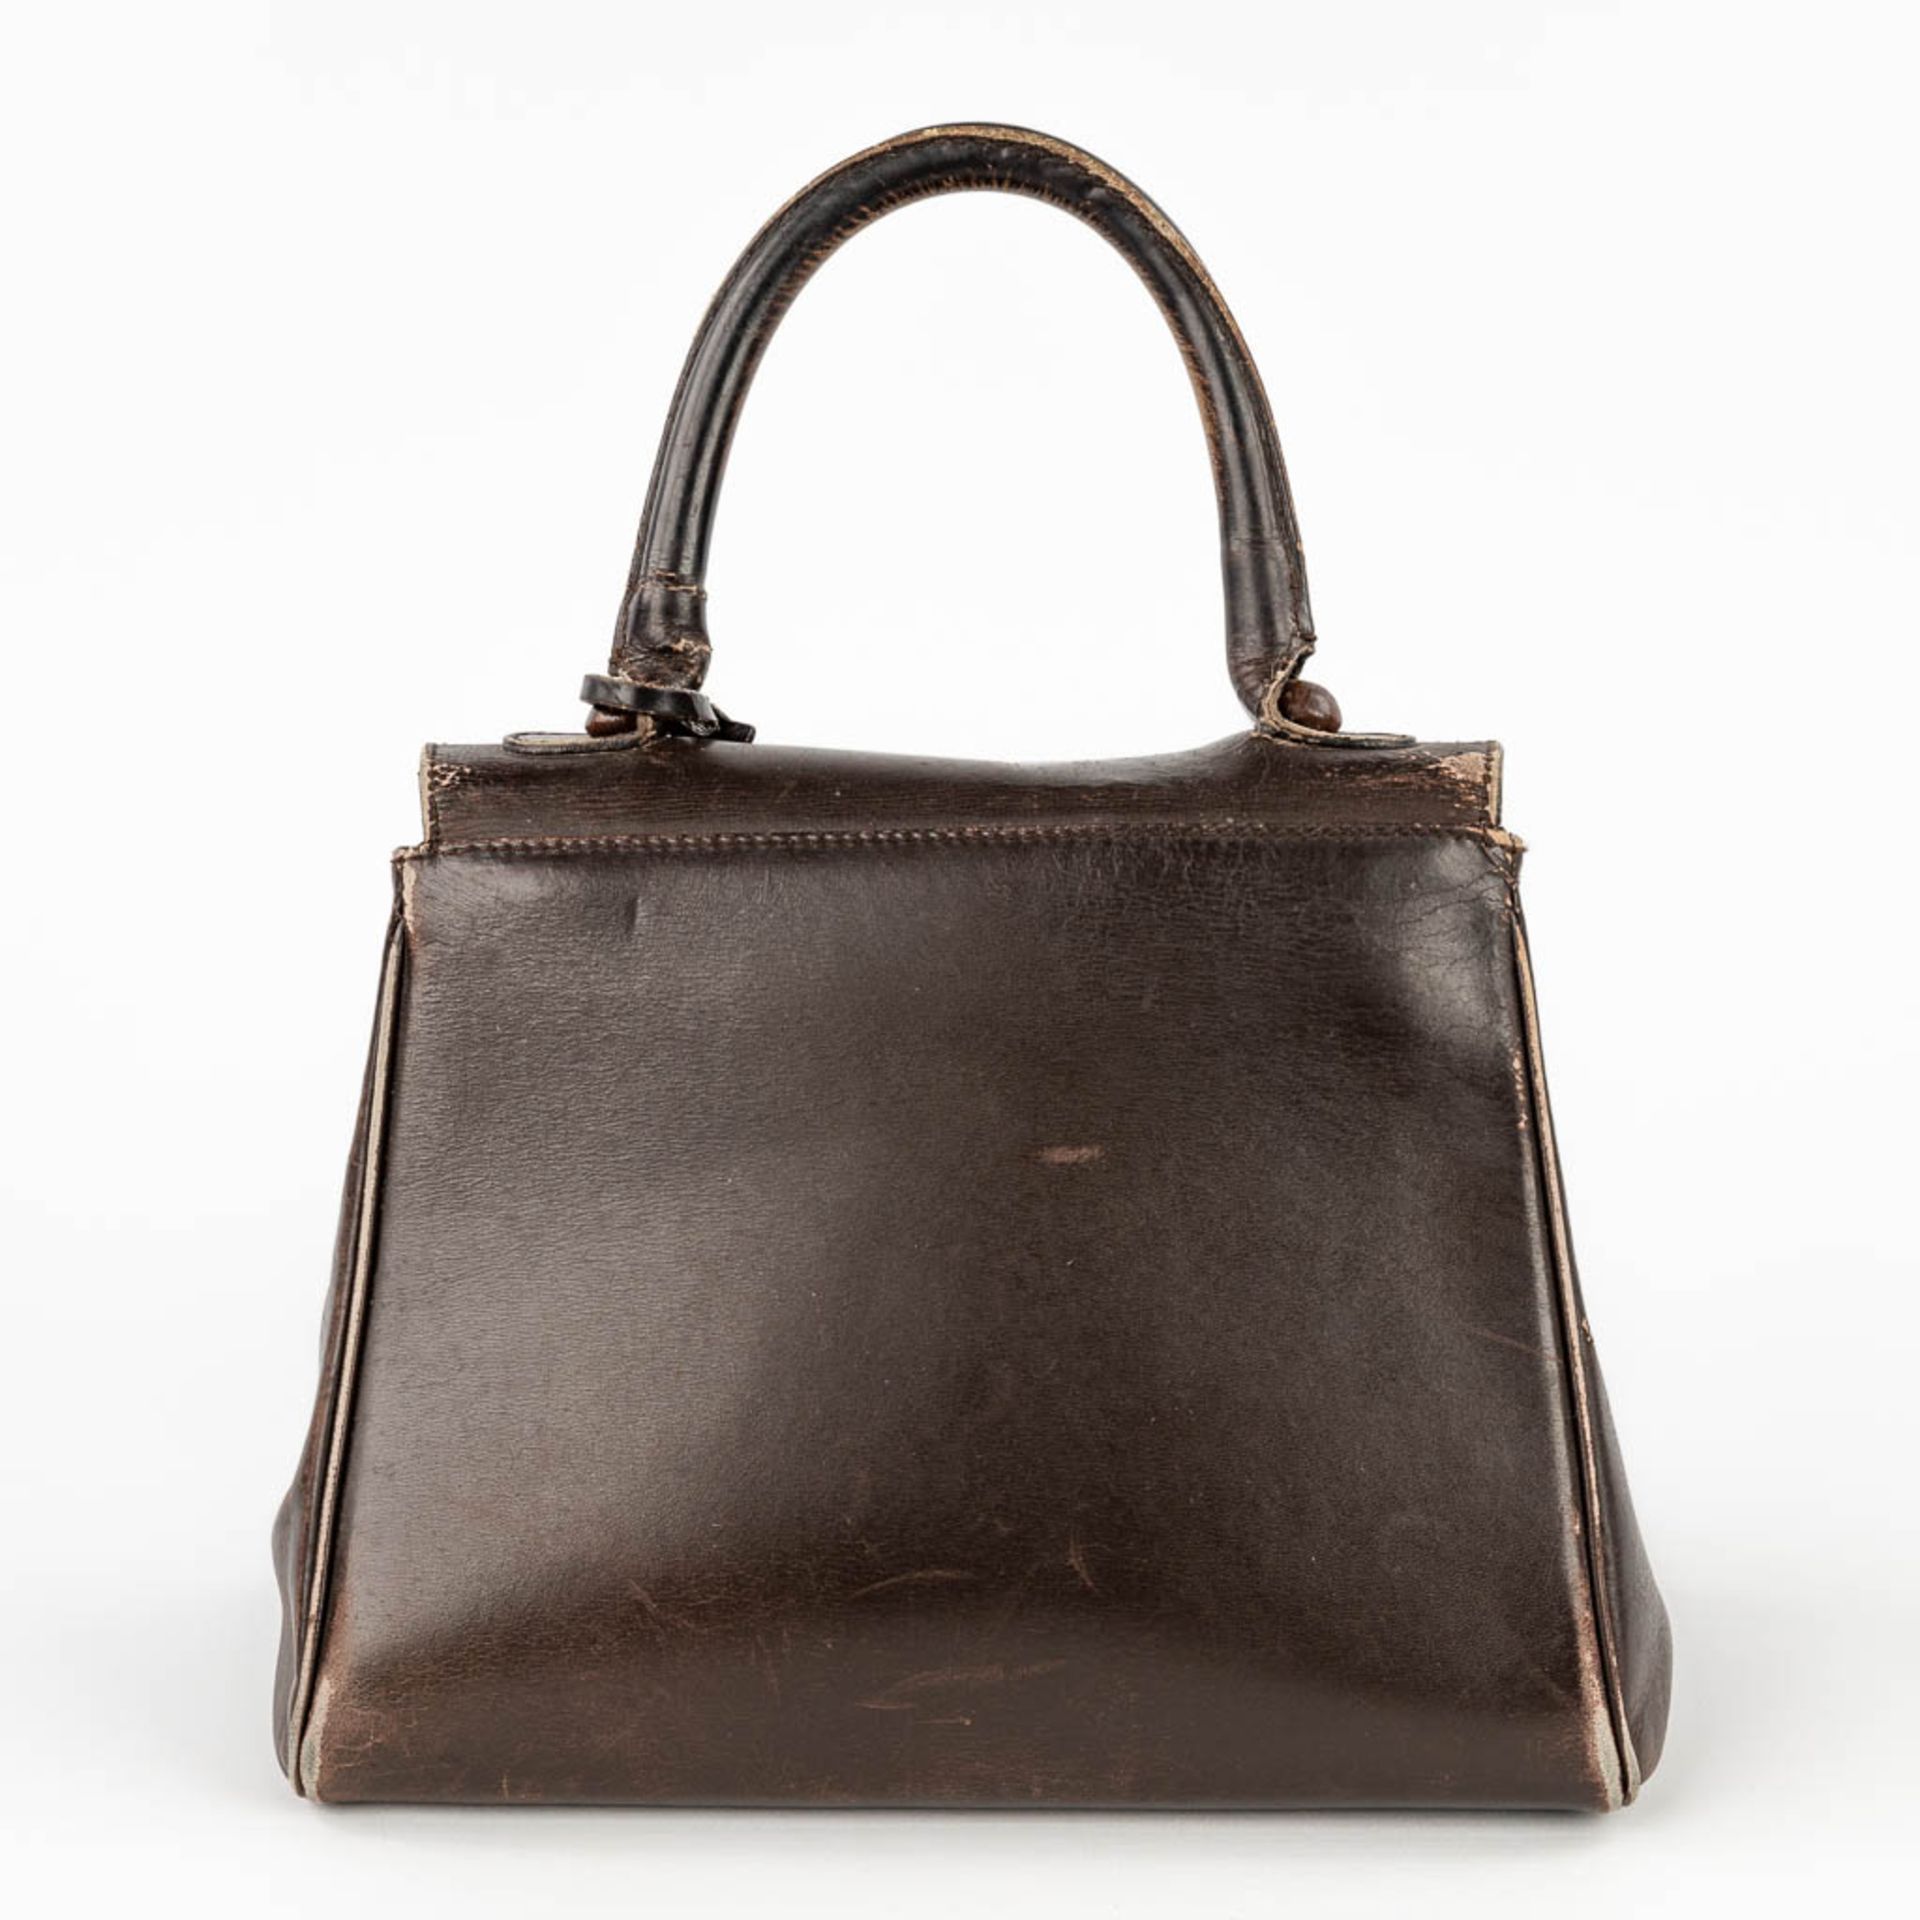 Delvaux Brillant PM, a handbag made of dark brown leather. Circa 1950. (W: 26 x H: 30 cm) - Image 5 of 19